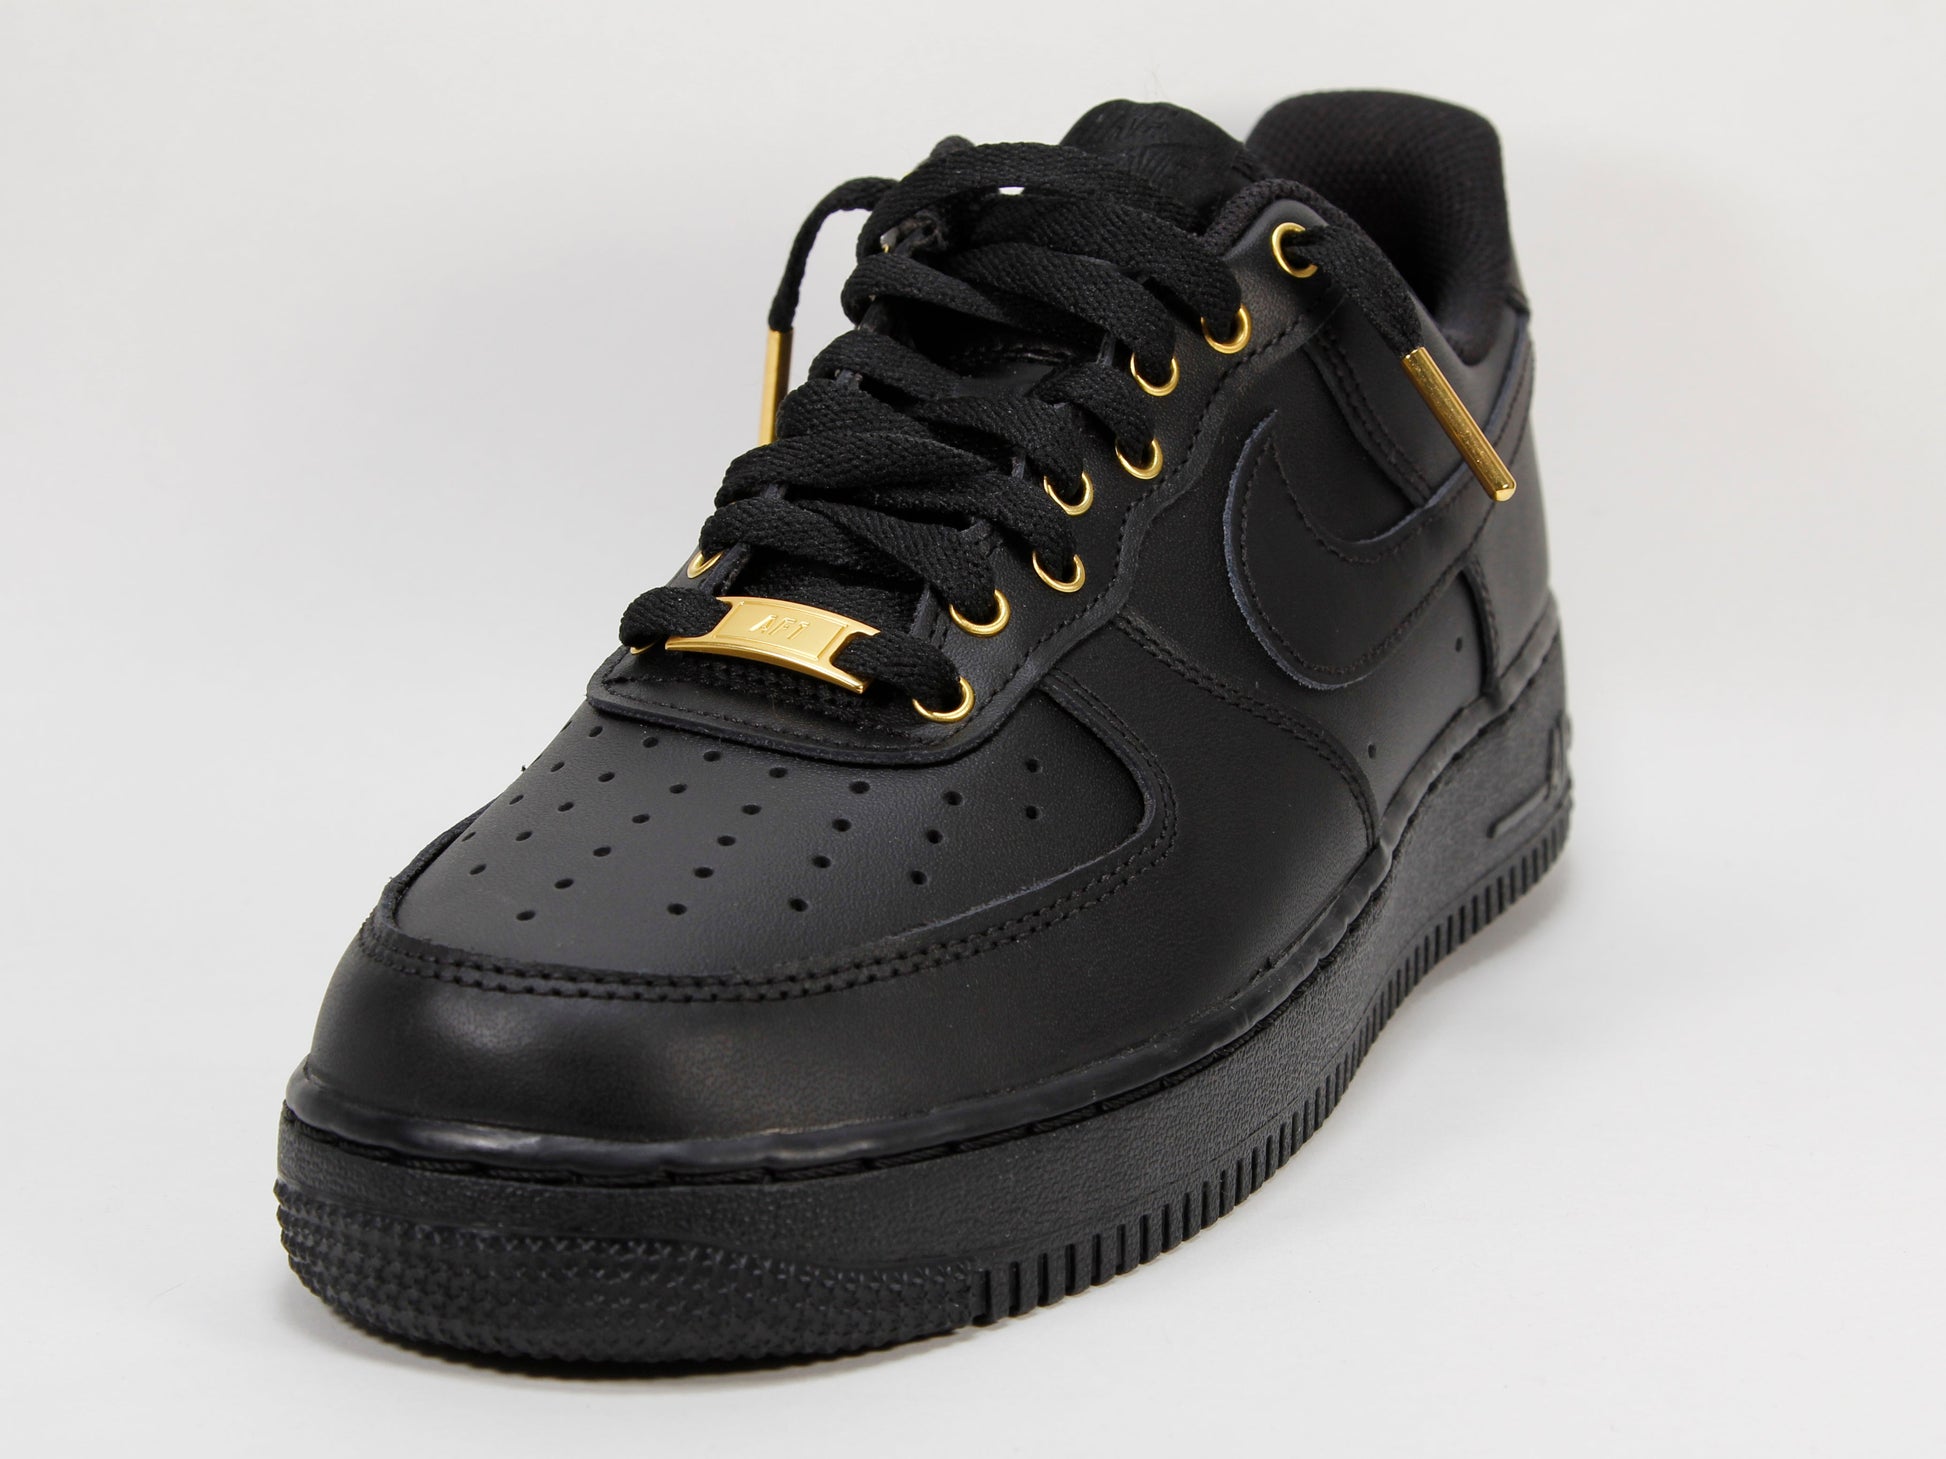 Custom Jordan 1 Low Black w/ Gold Accents – Primo Black